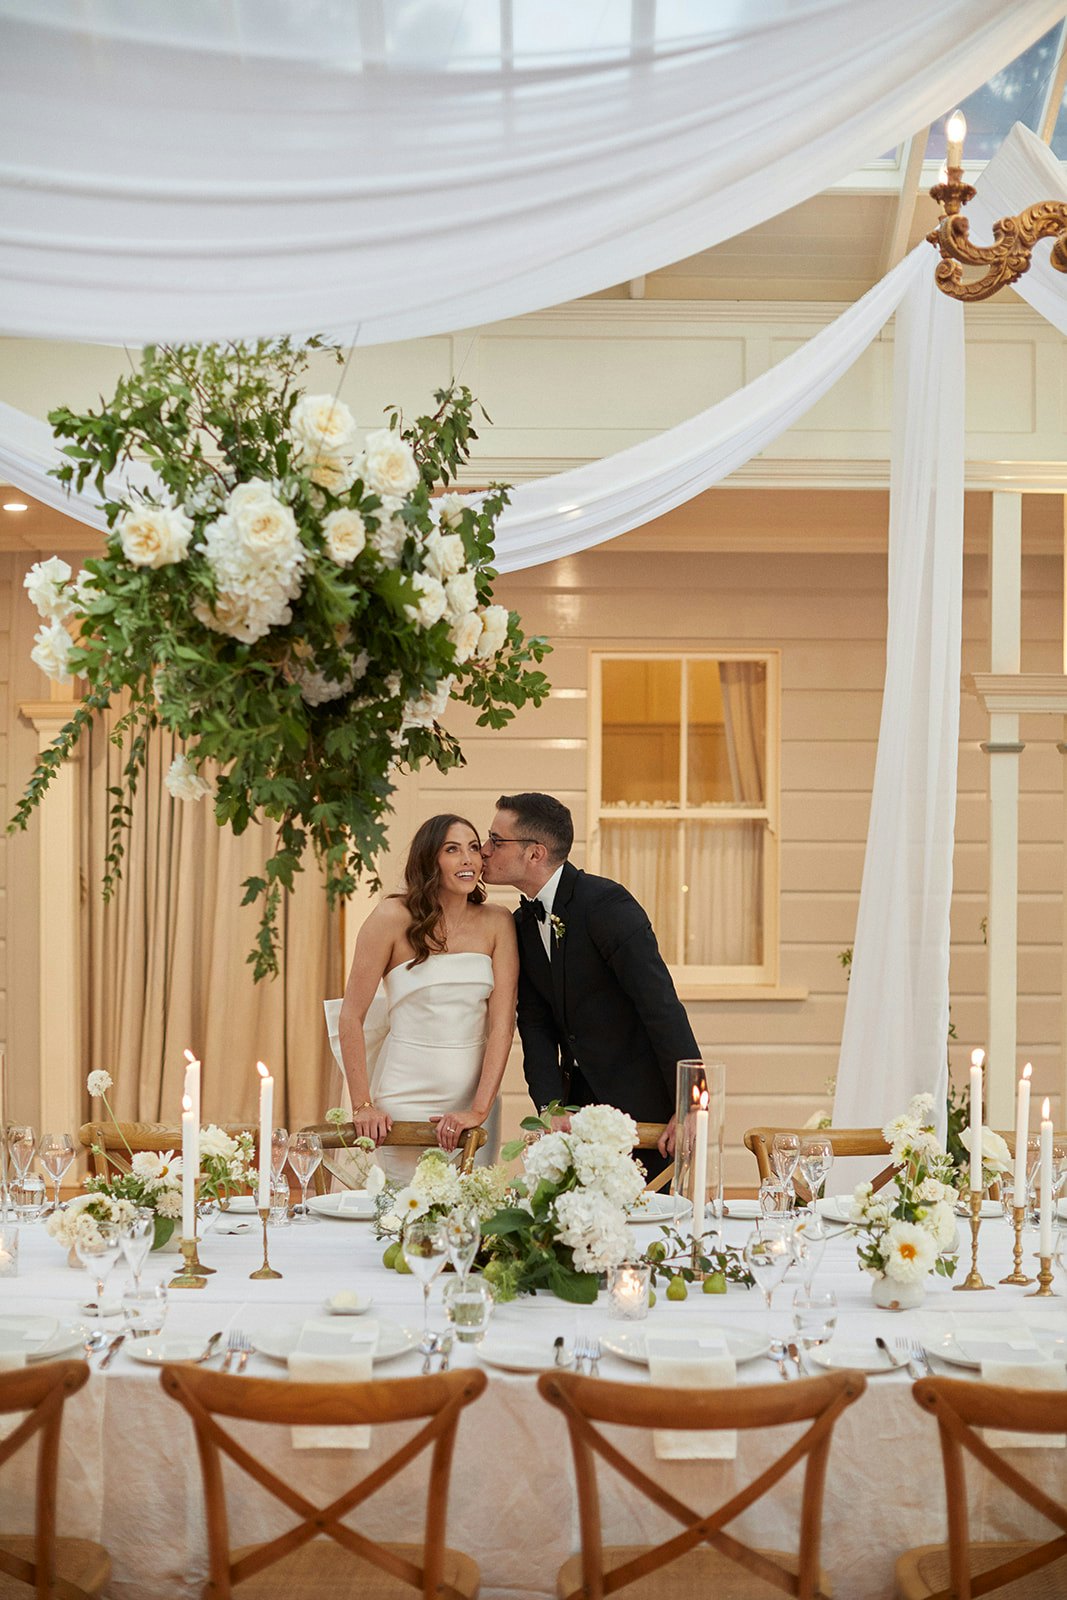 Groom kissing bride at wedding reception